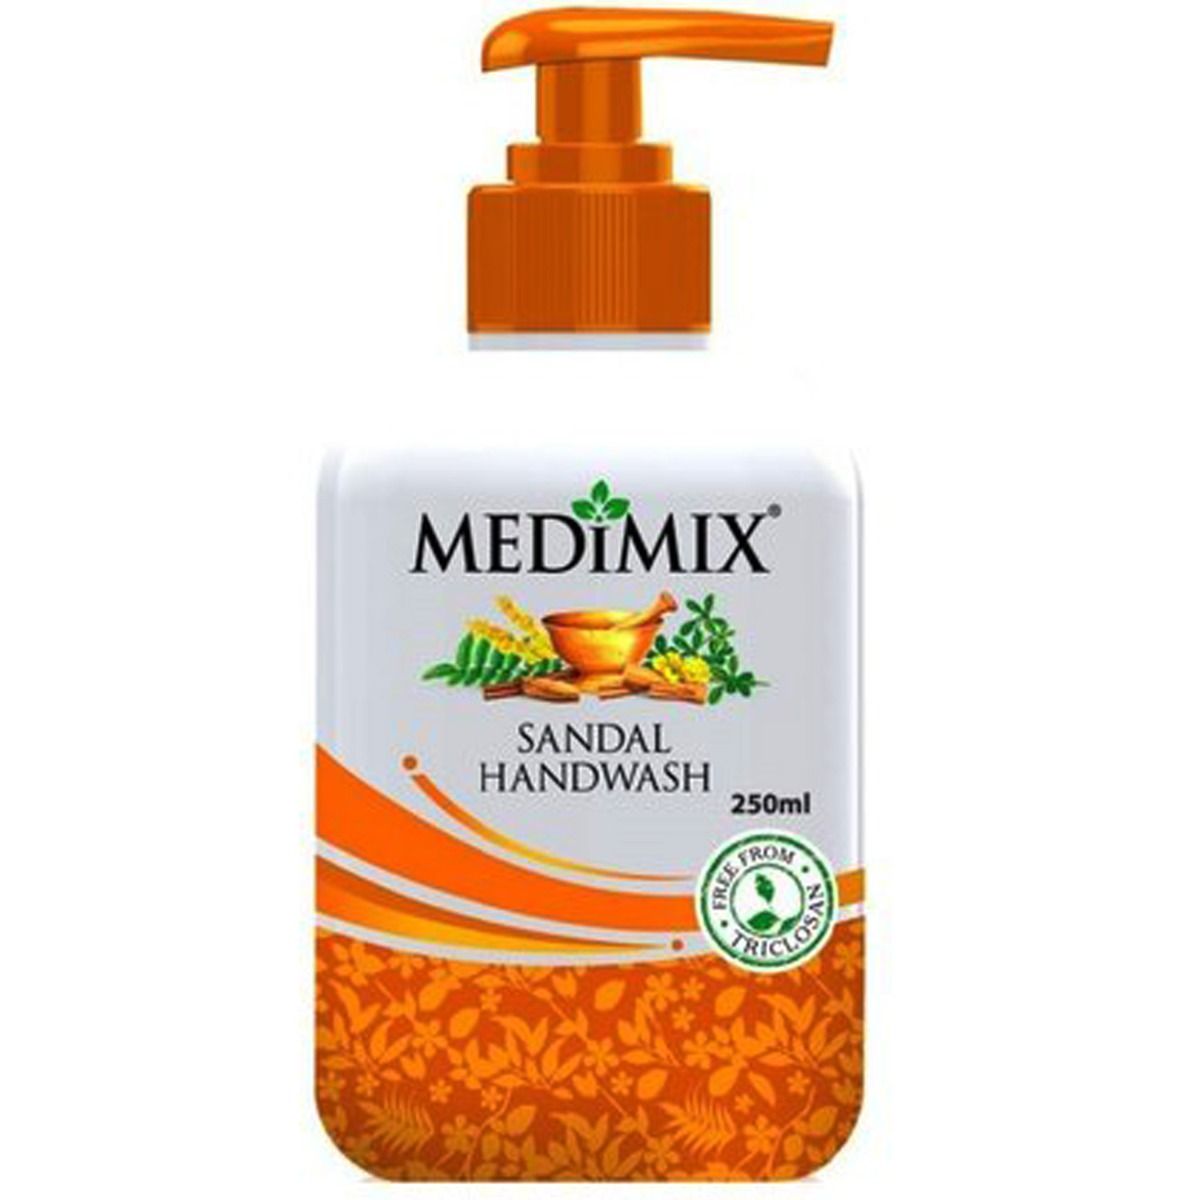 Buy Medimix Sandal Handwash, 250 ml Online